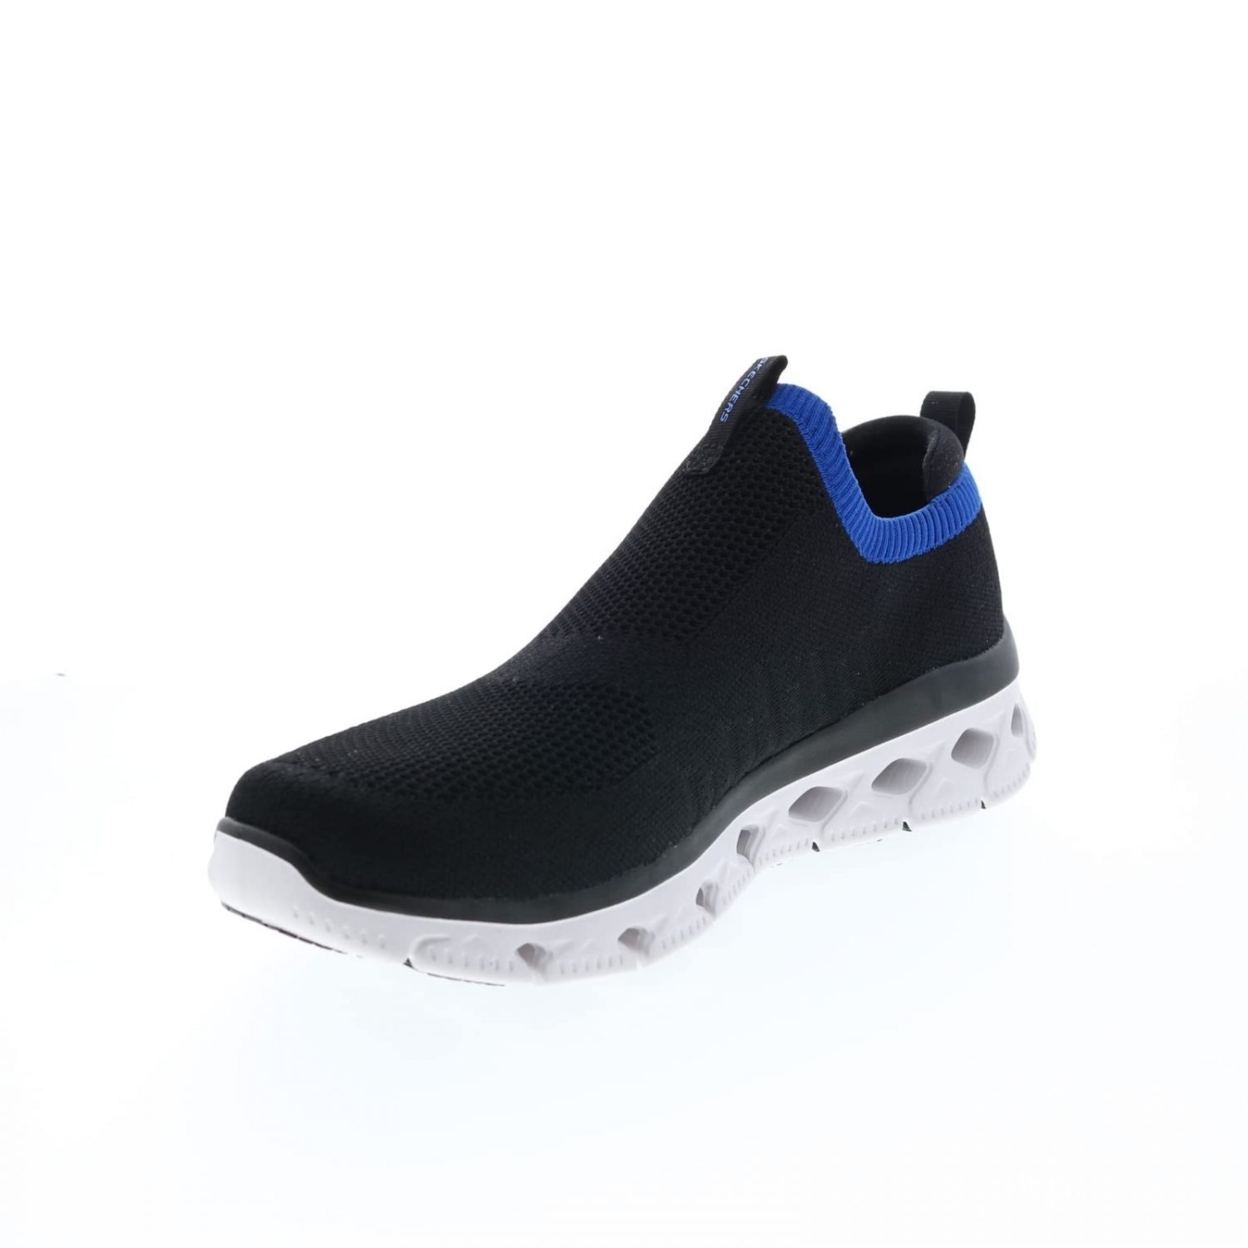 Skechers Mens Glide Step Flex Kitfix Lifestyle Sneakers Shoes BLACK/BLUE - BLACK/BLUE, 11.5-M